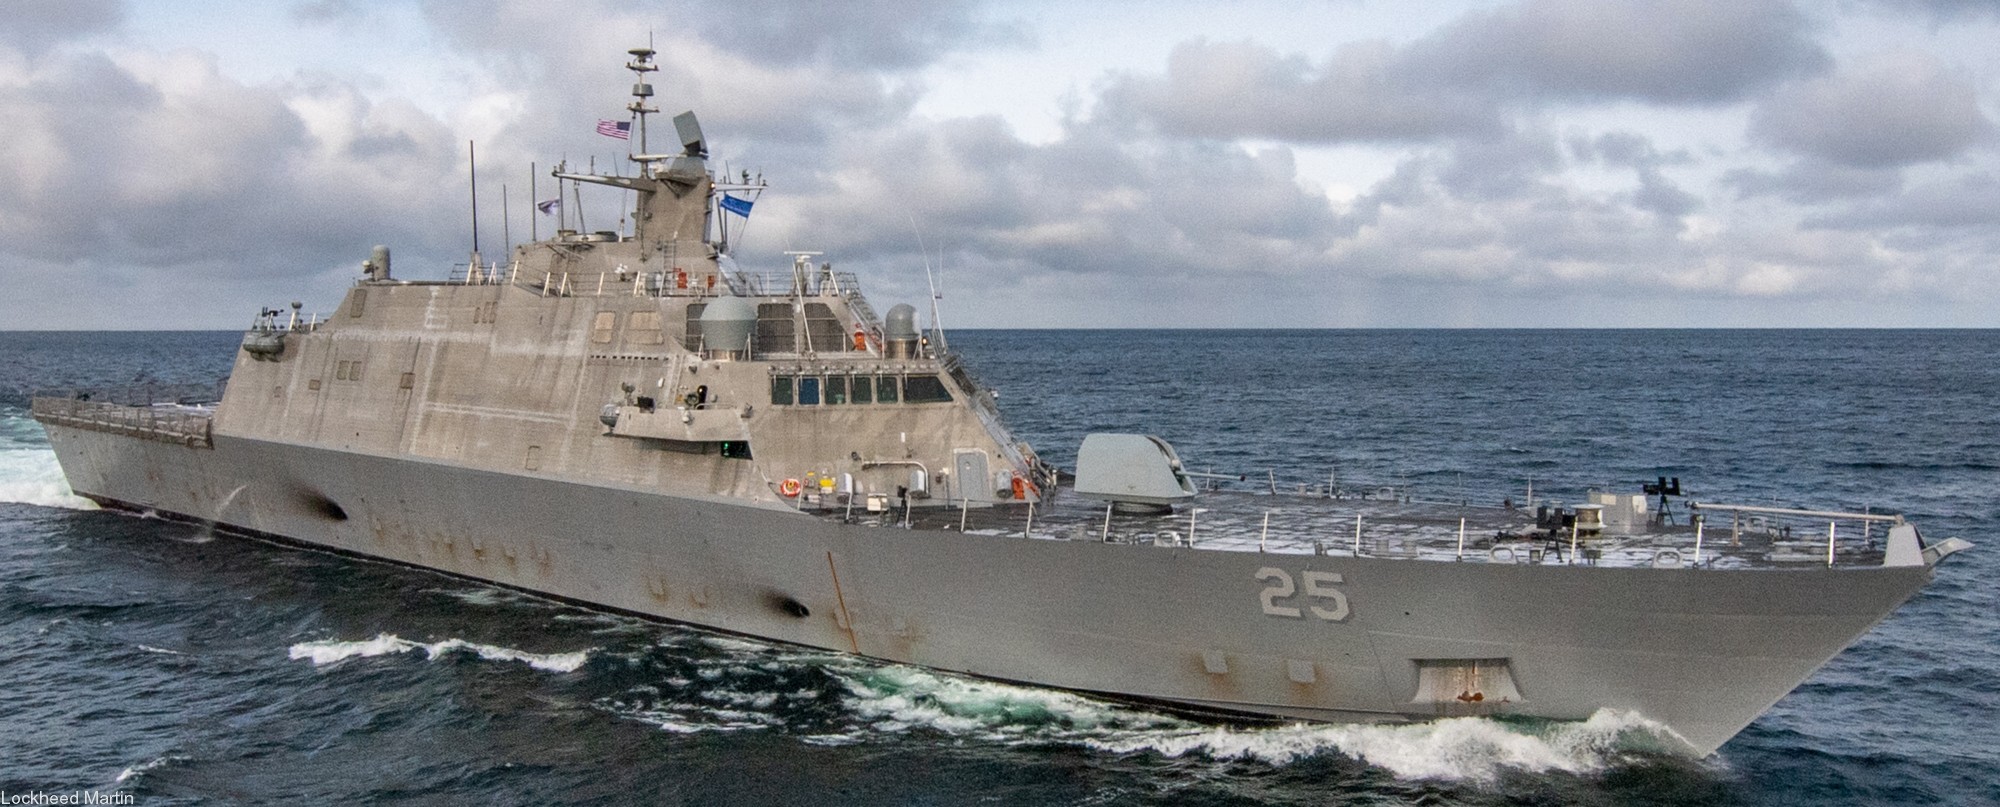 lcs-25 uss marinette freedom class littoral combat ship us navy trials lockheed martin 14